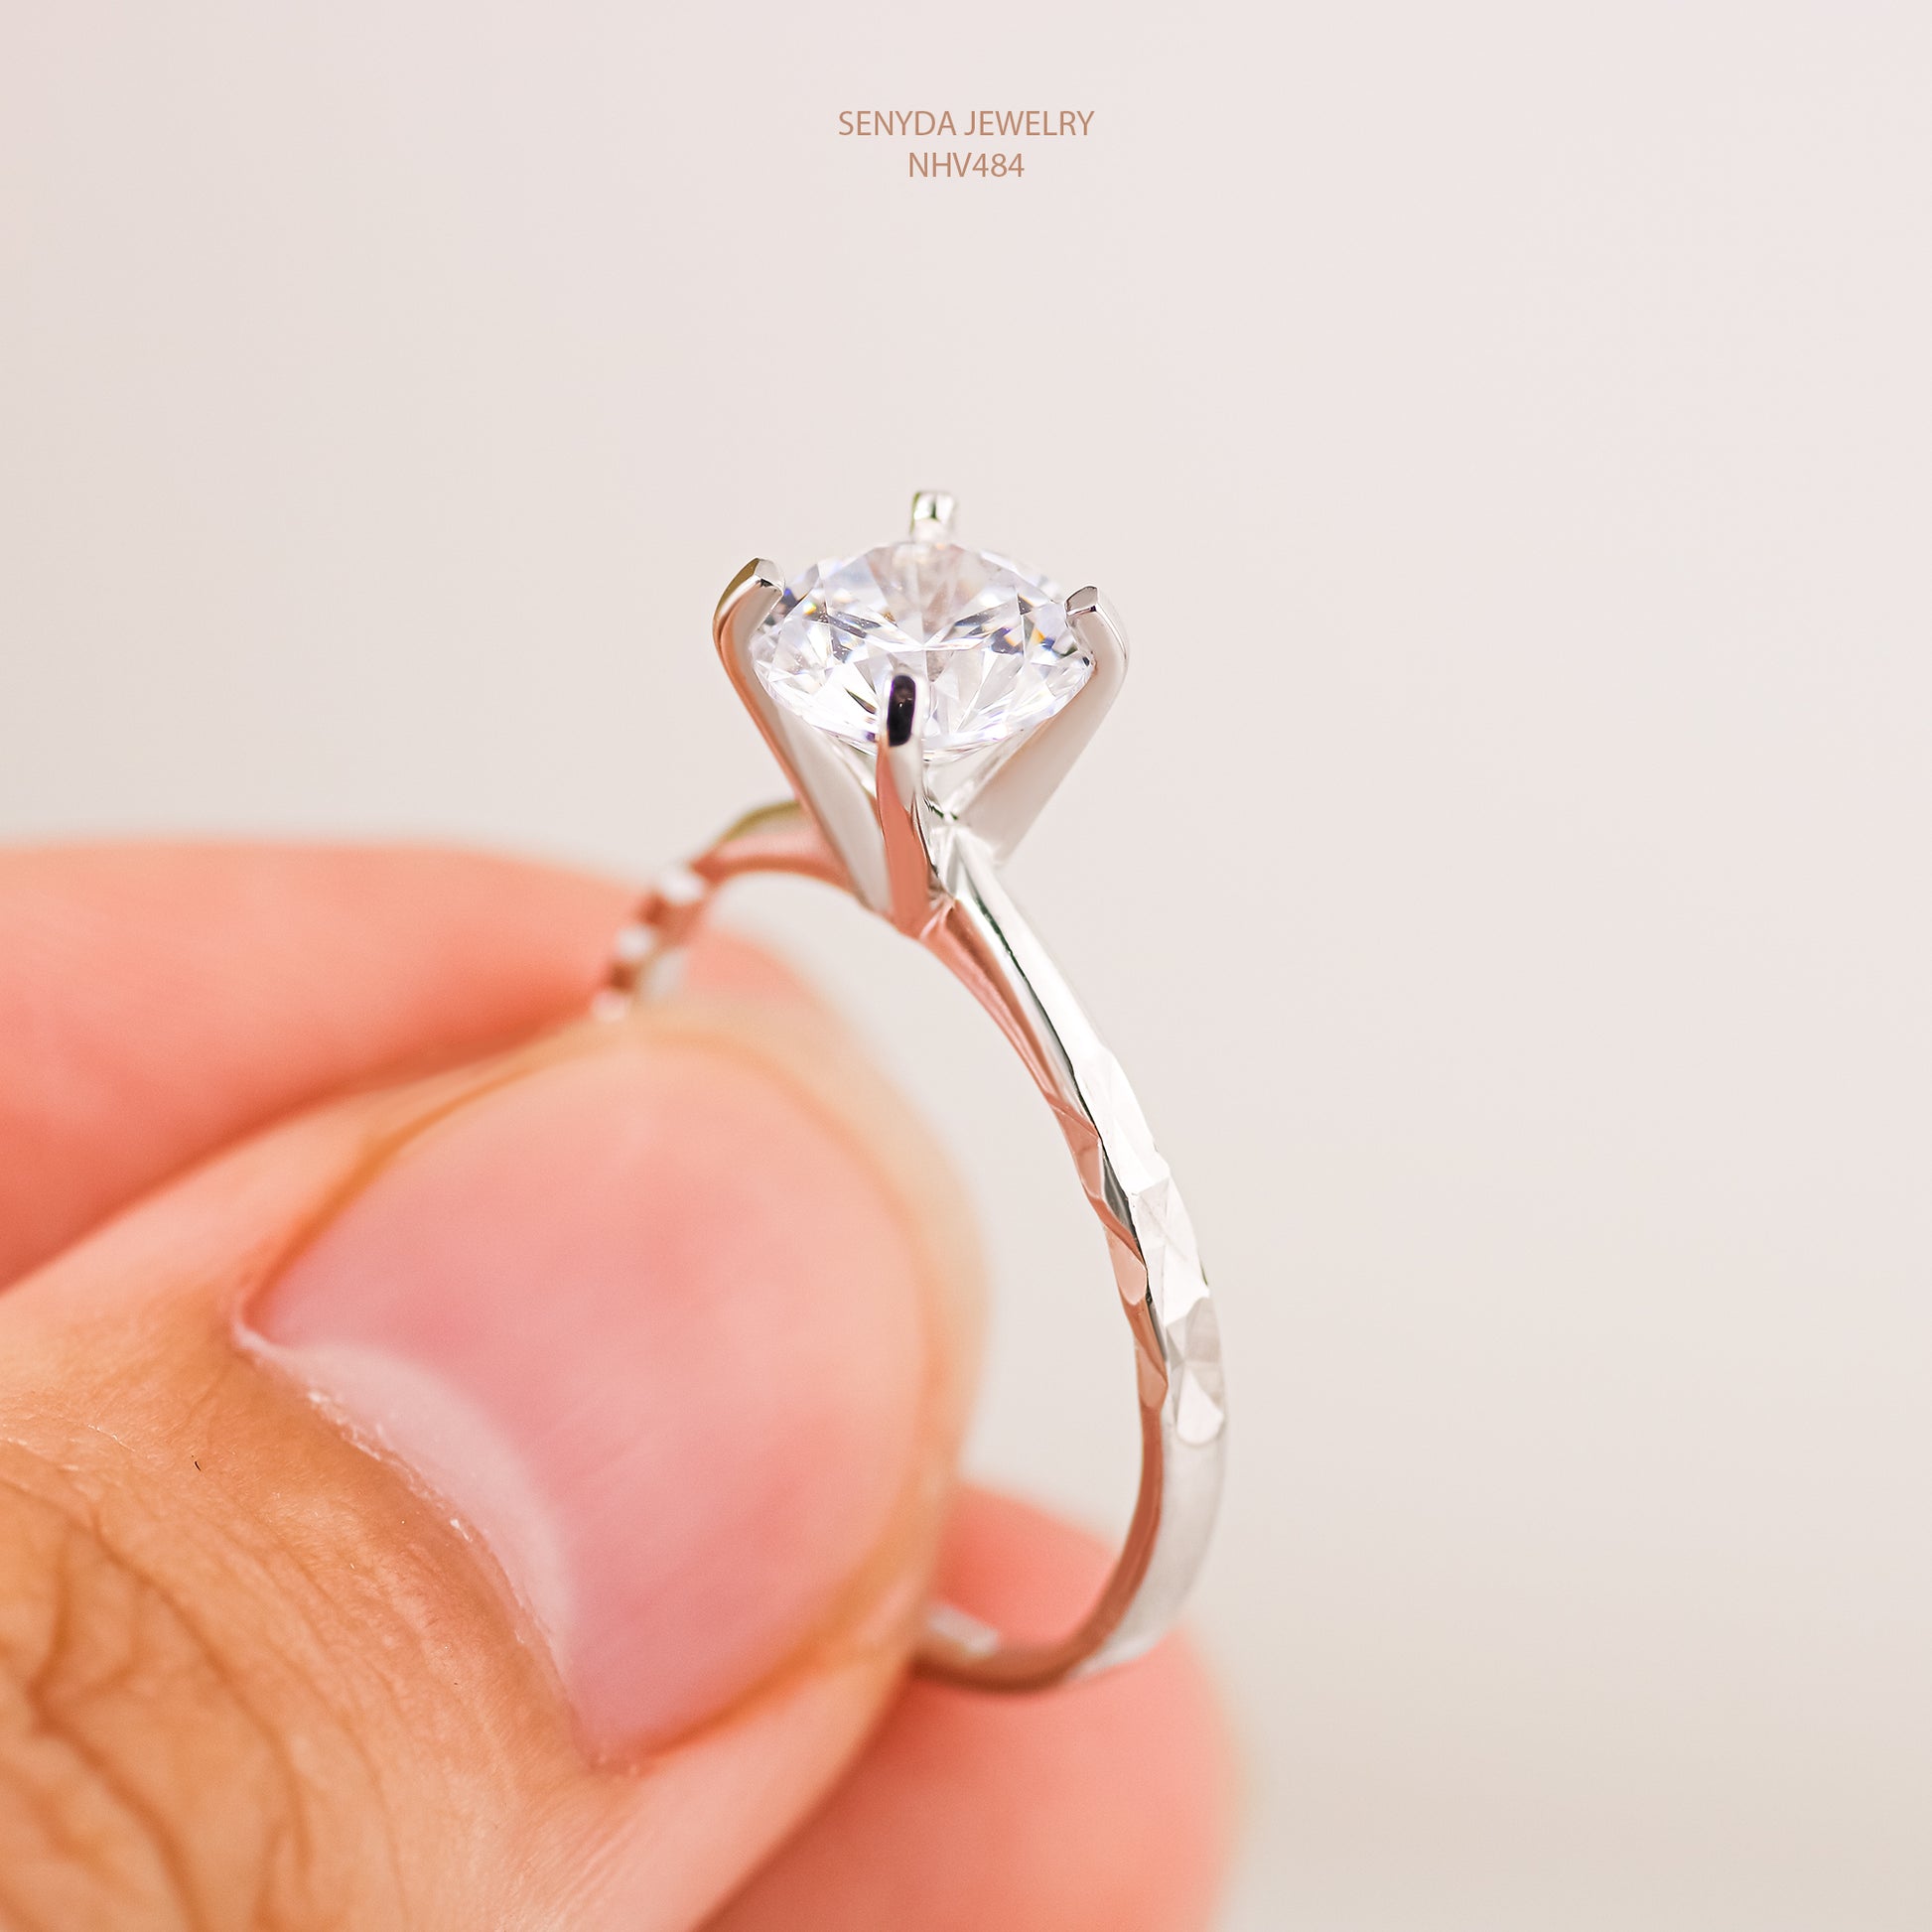 Senyda 10K Solid Gold Special Ring - "BIG LOVE" RING